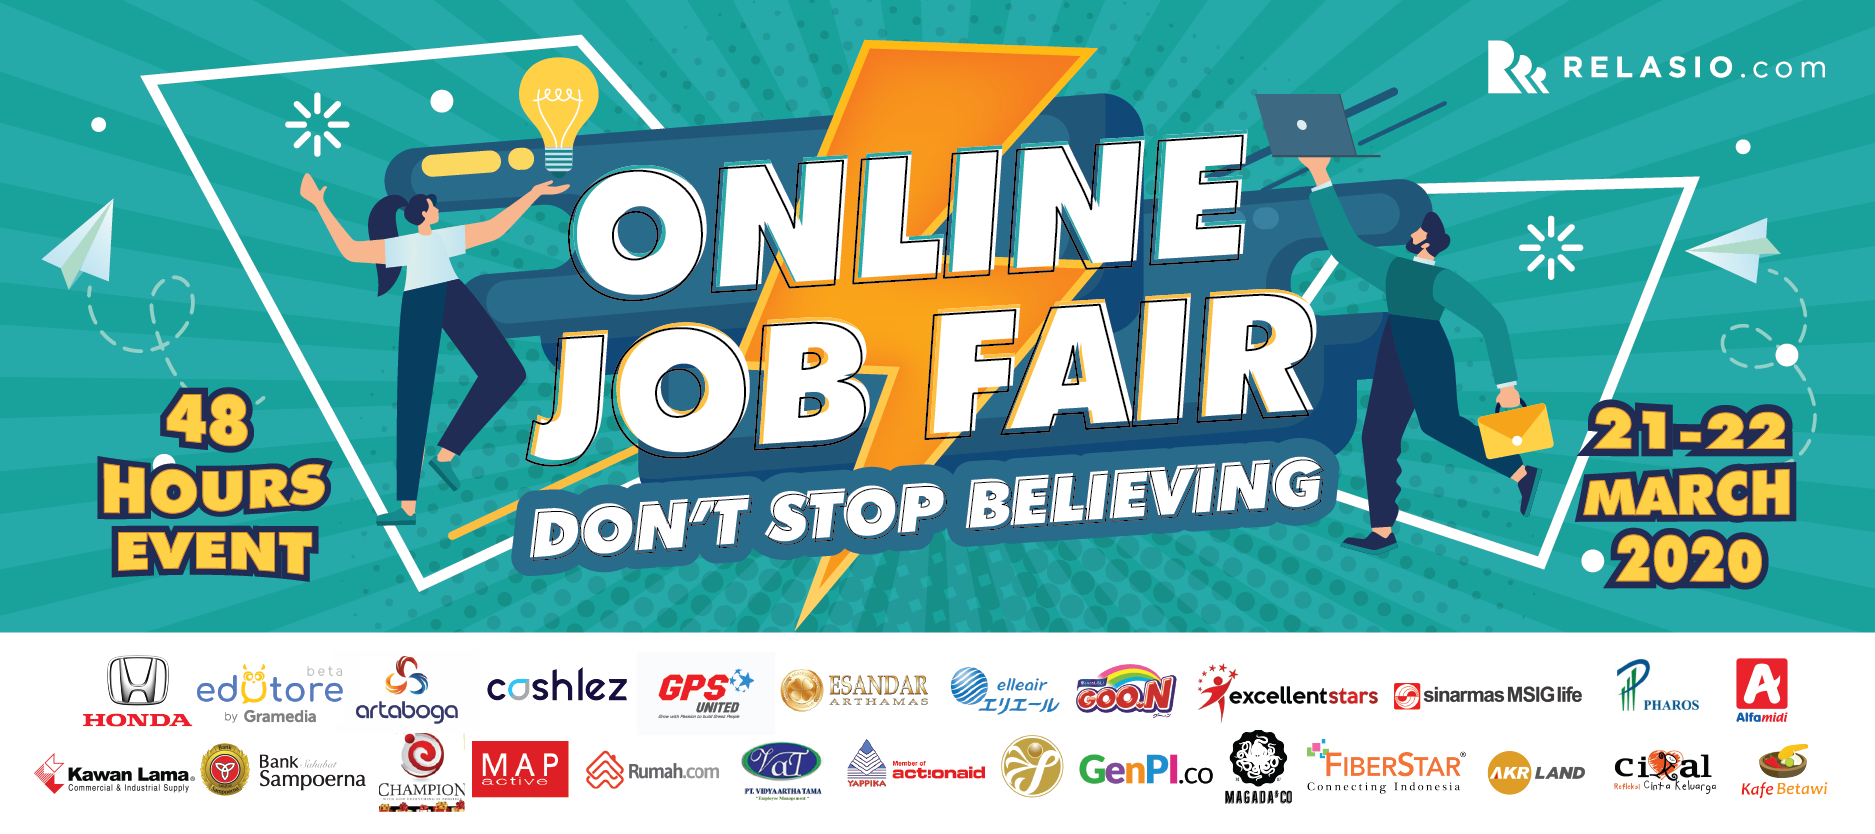 Online Job Fair Relasio.com March 2020 Session 1